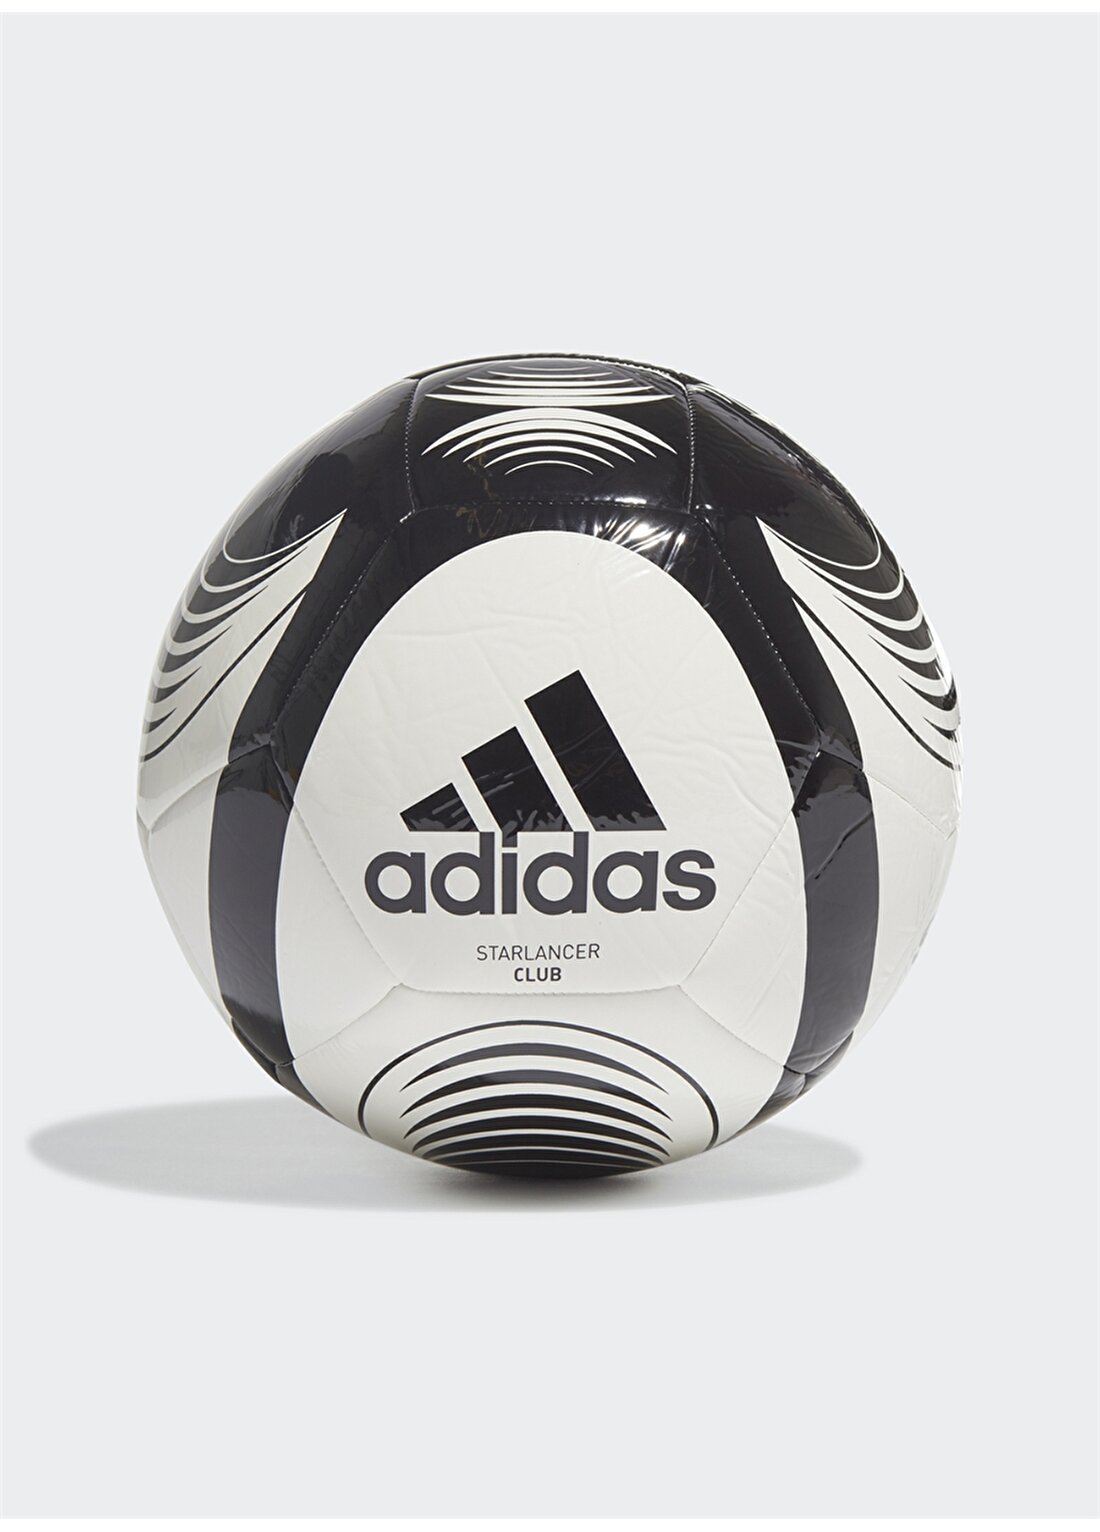 Adidas Gk3499 Starlancer Clb Polo Yaka Beyaz - Siyah Erkek Futbol Topu